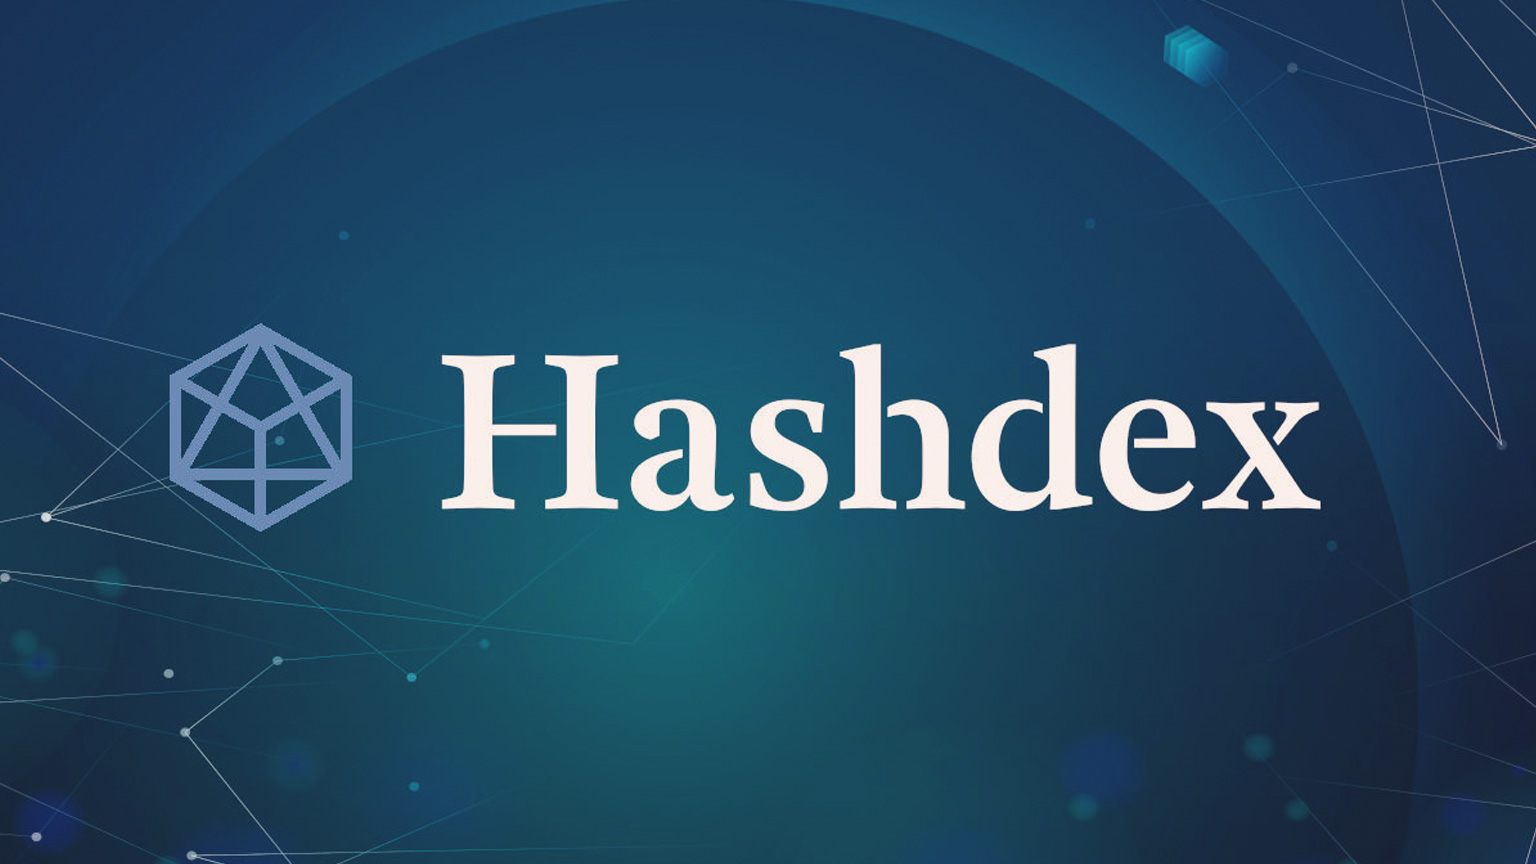 hashdex - دریافت مجوز ارائه ETP در اروپا توسط شرکت Hashdex